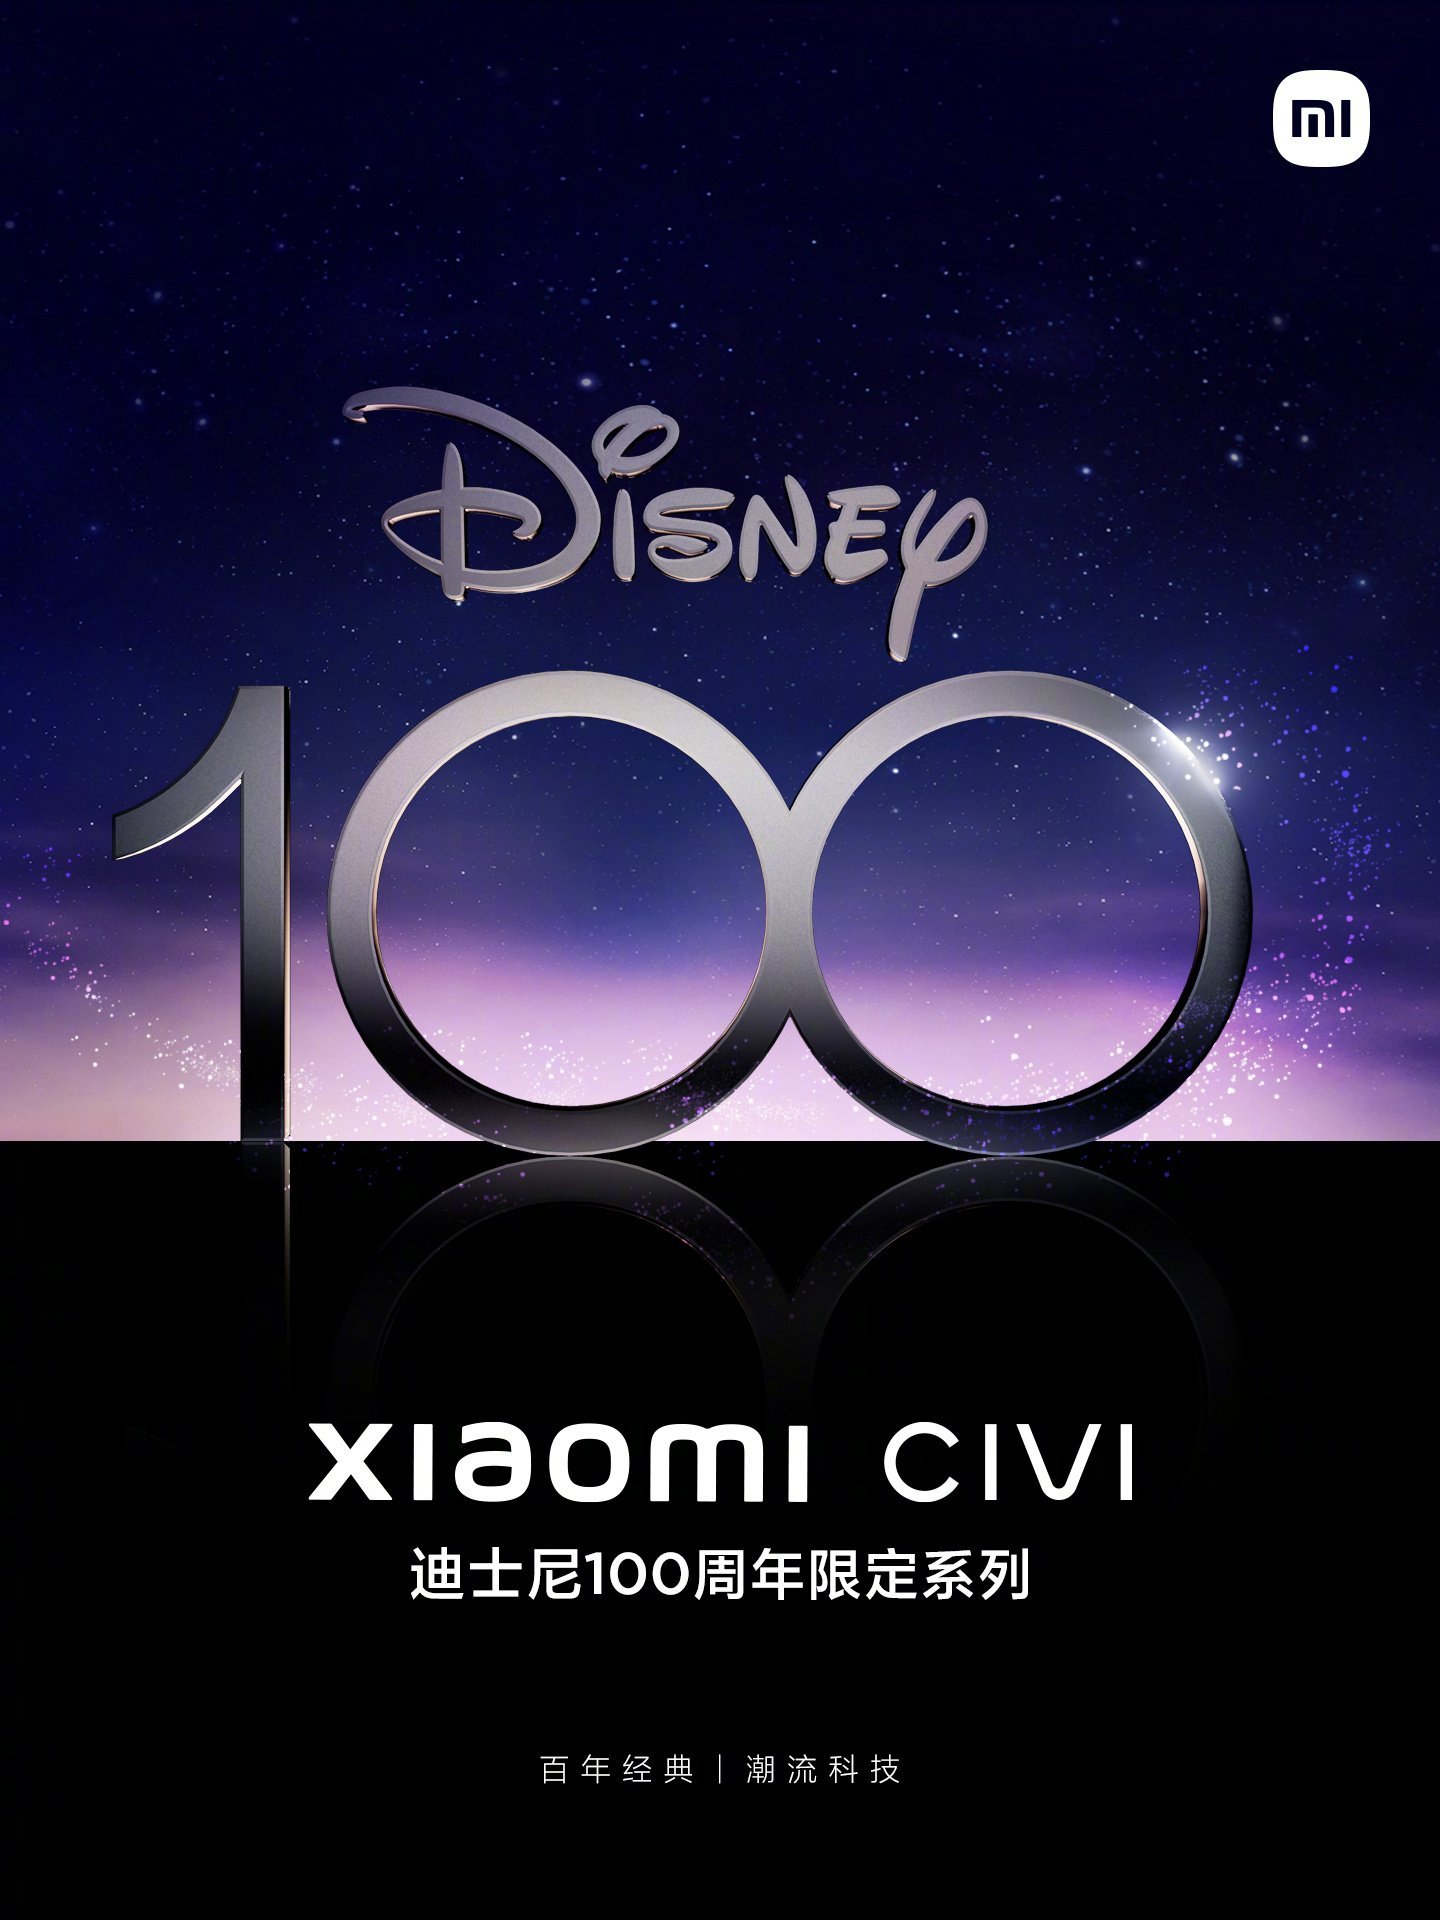 Primeira arte promocional do Xiaomi Civi Disney.